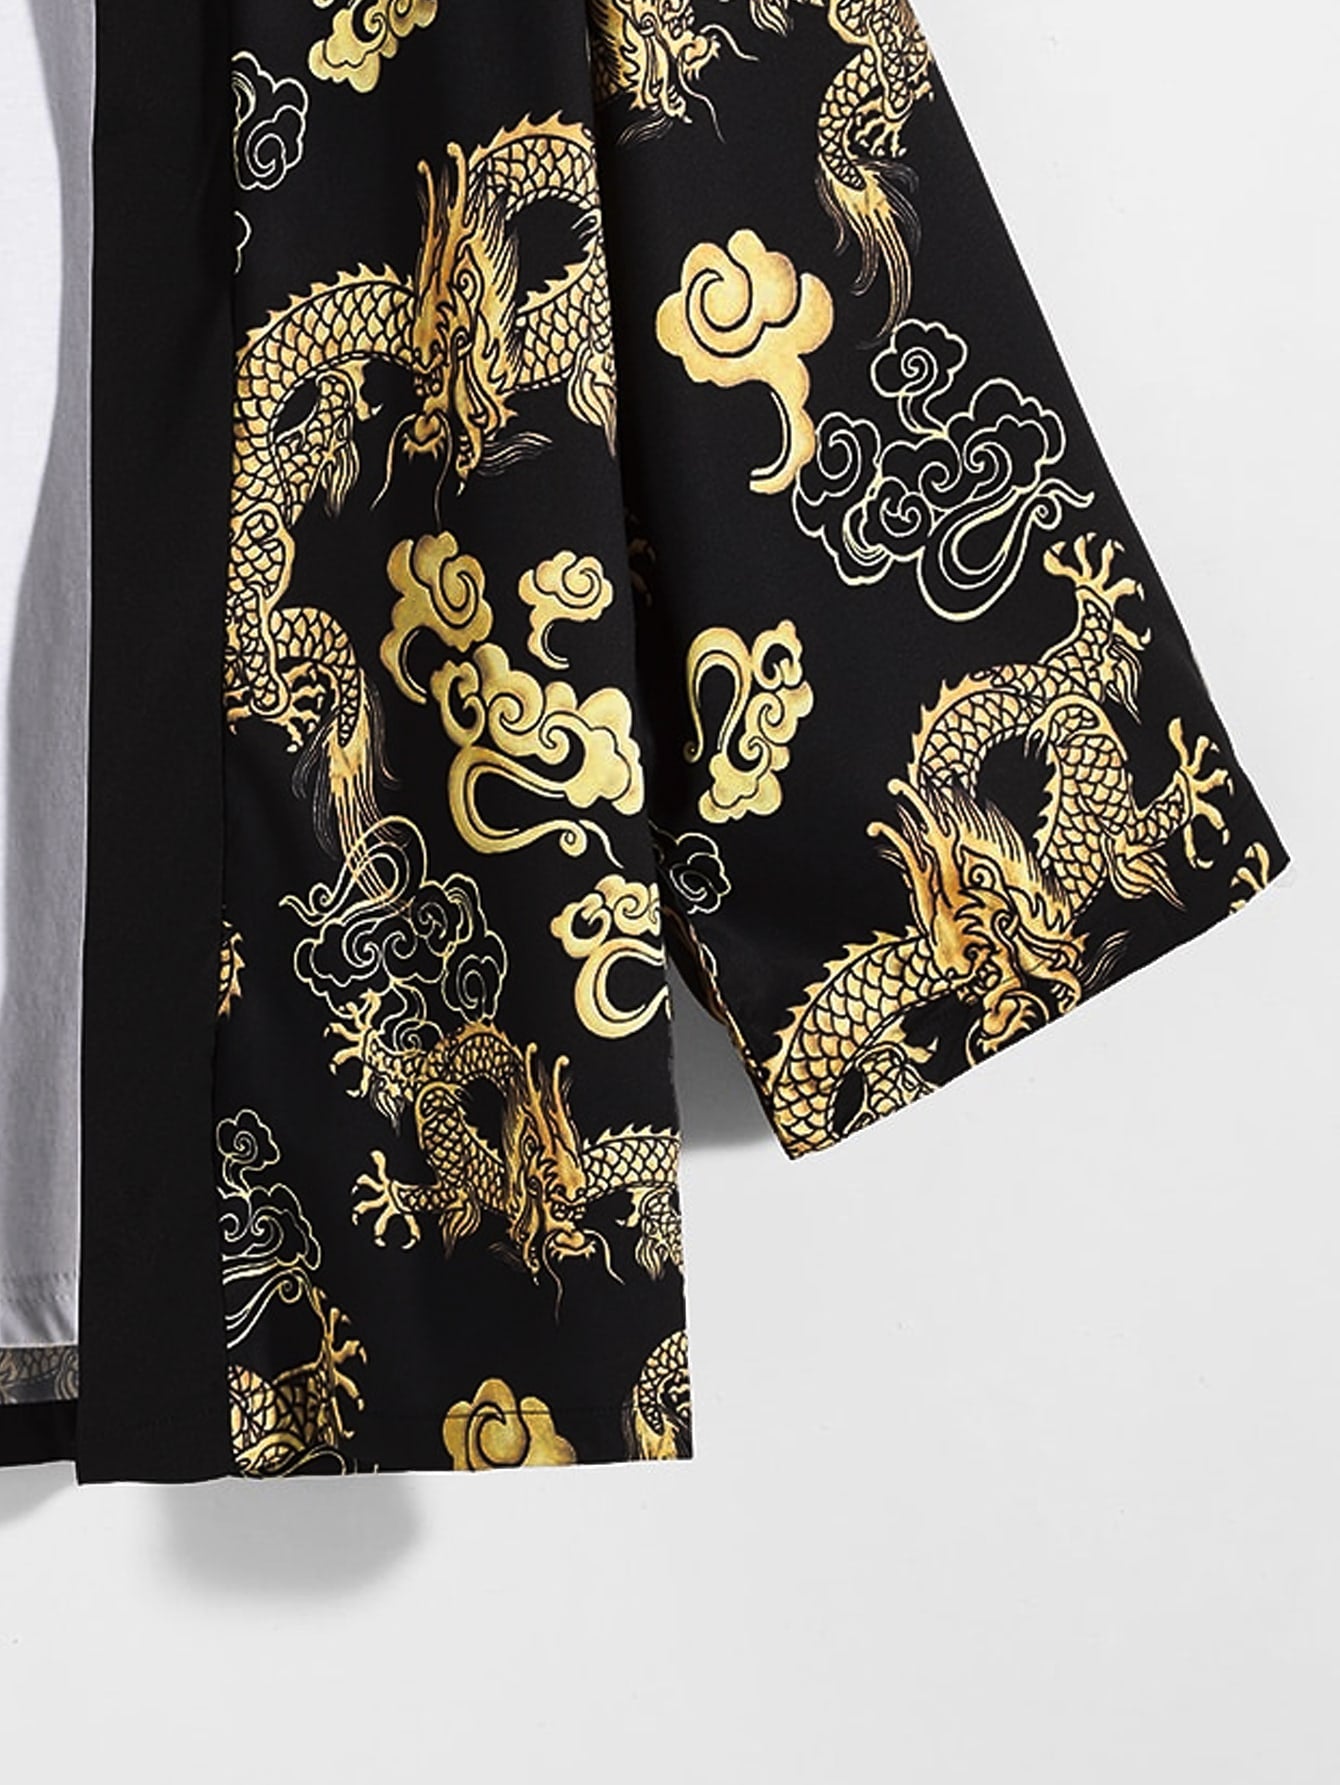 Zen Clothes - Fashionable Yoga Cardigan Kimono Japanese Long Sleeve - Personal Hour for Yoga and Meditations 